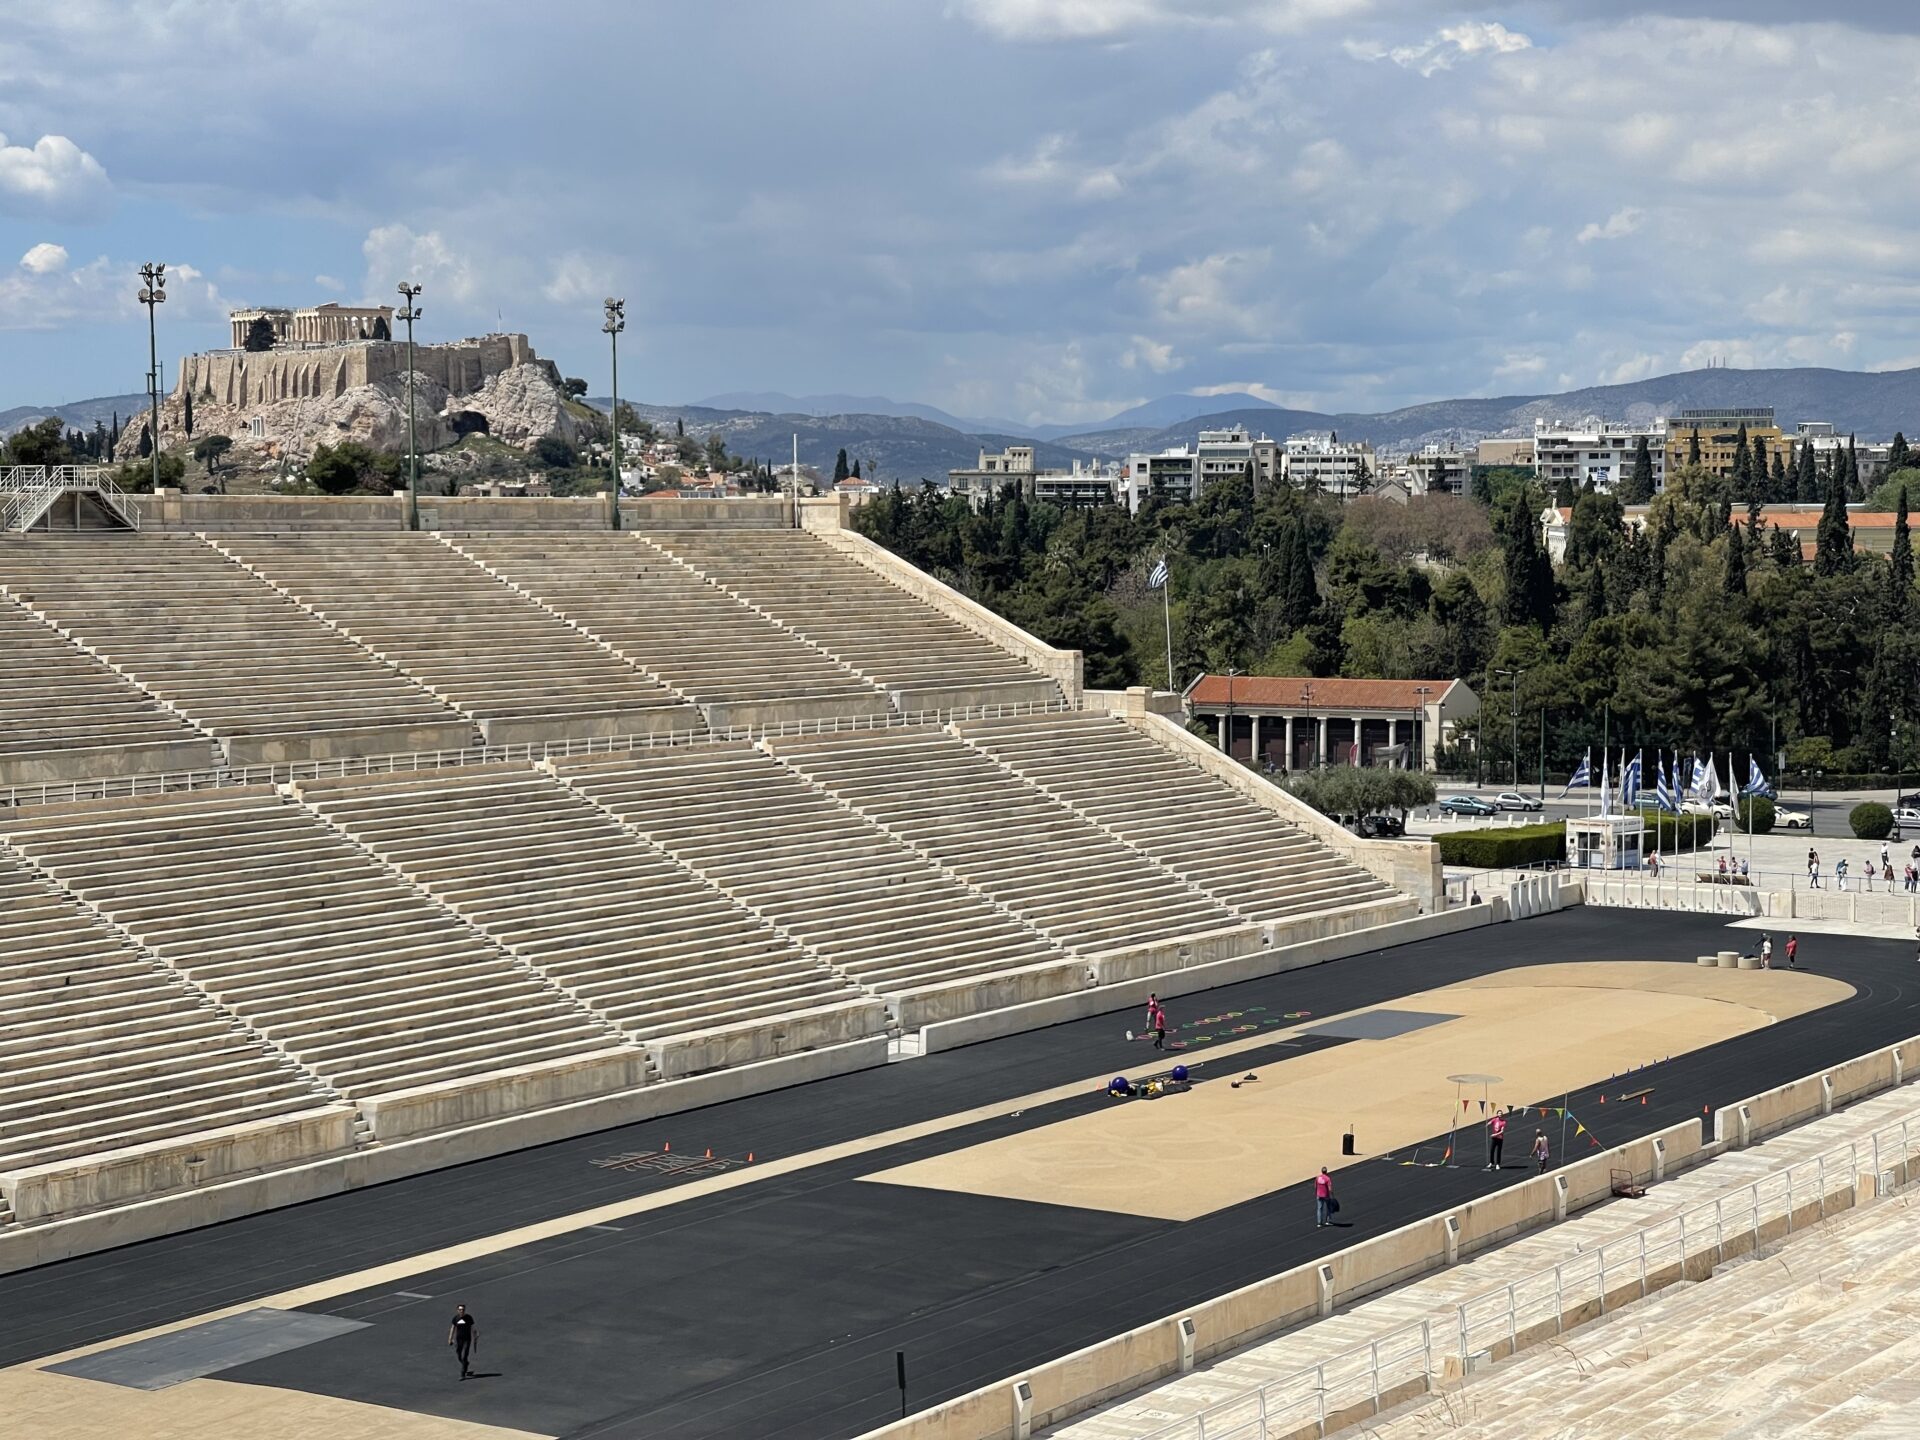 Panathenaic Stadium (Kallimarmaro) in Athens, Greece